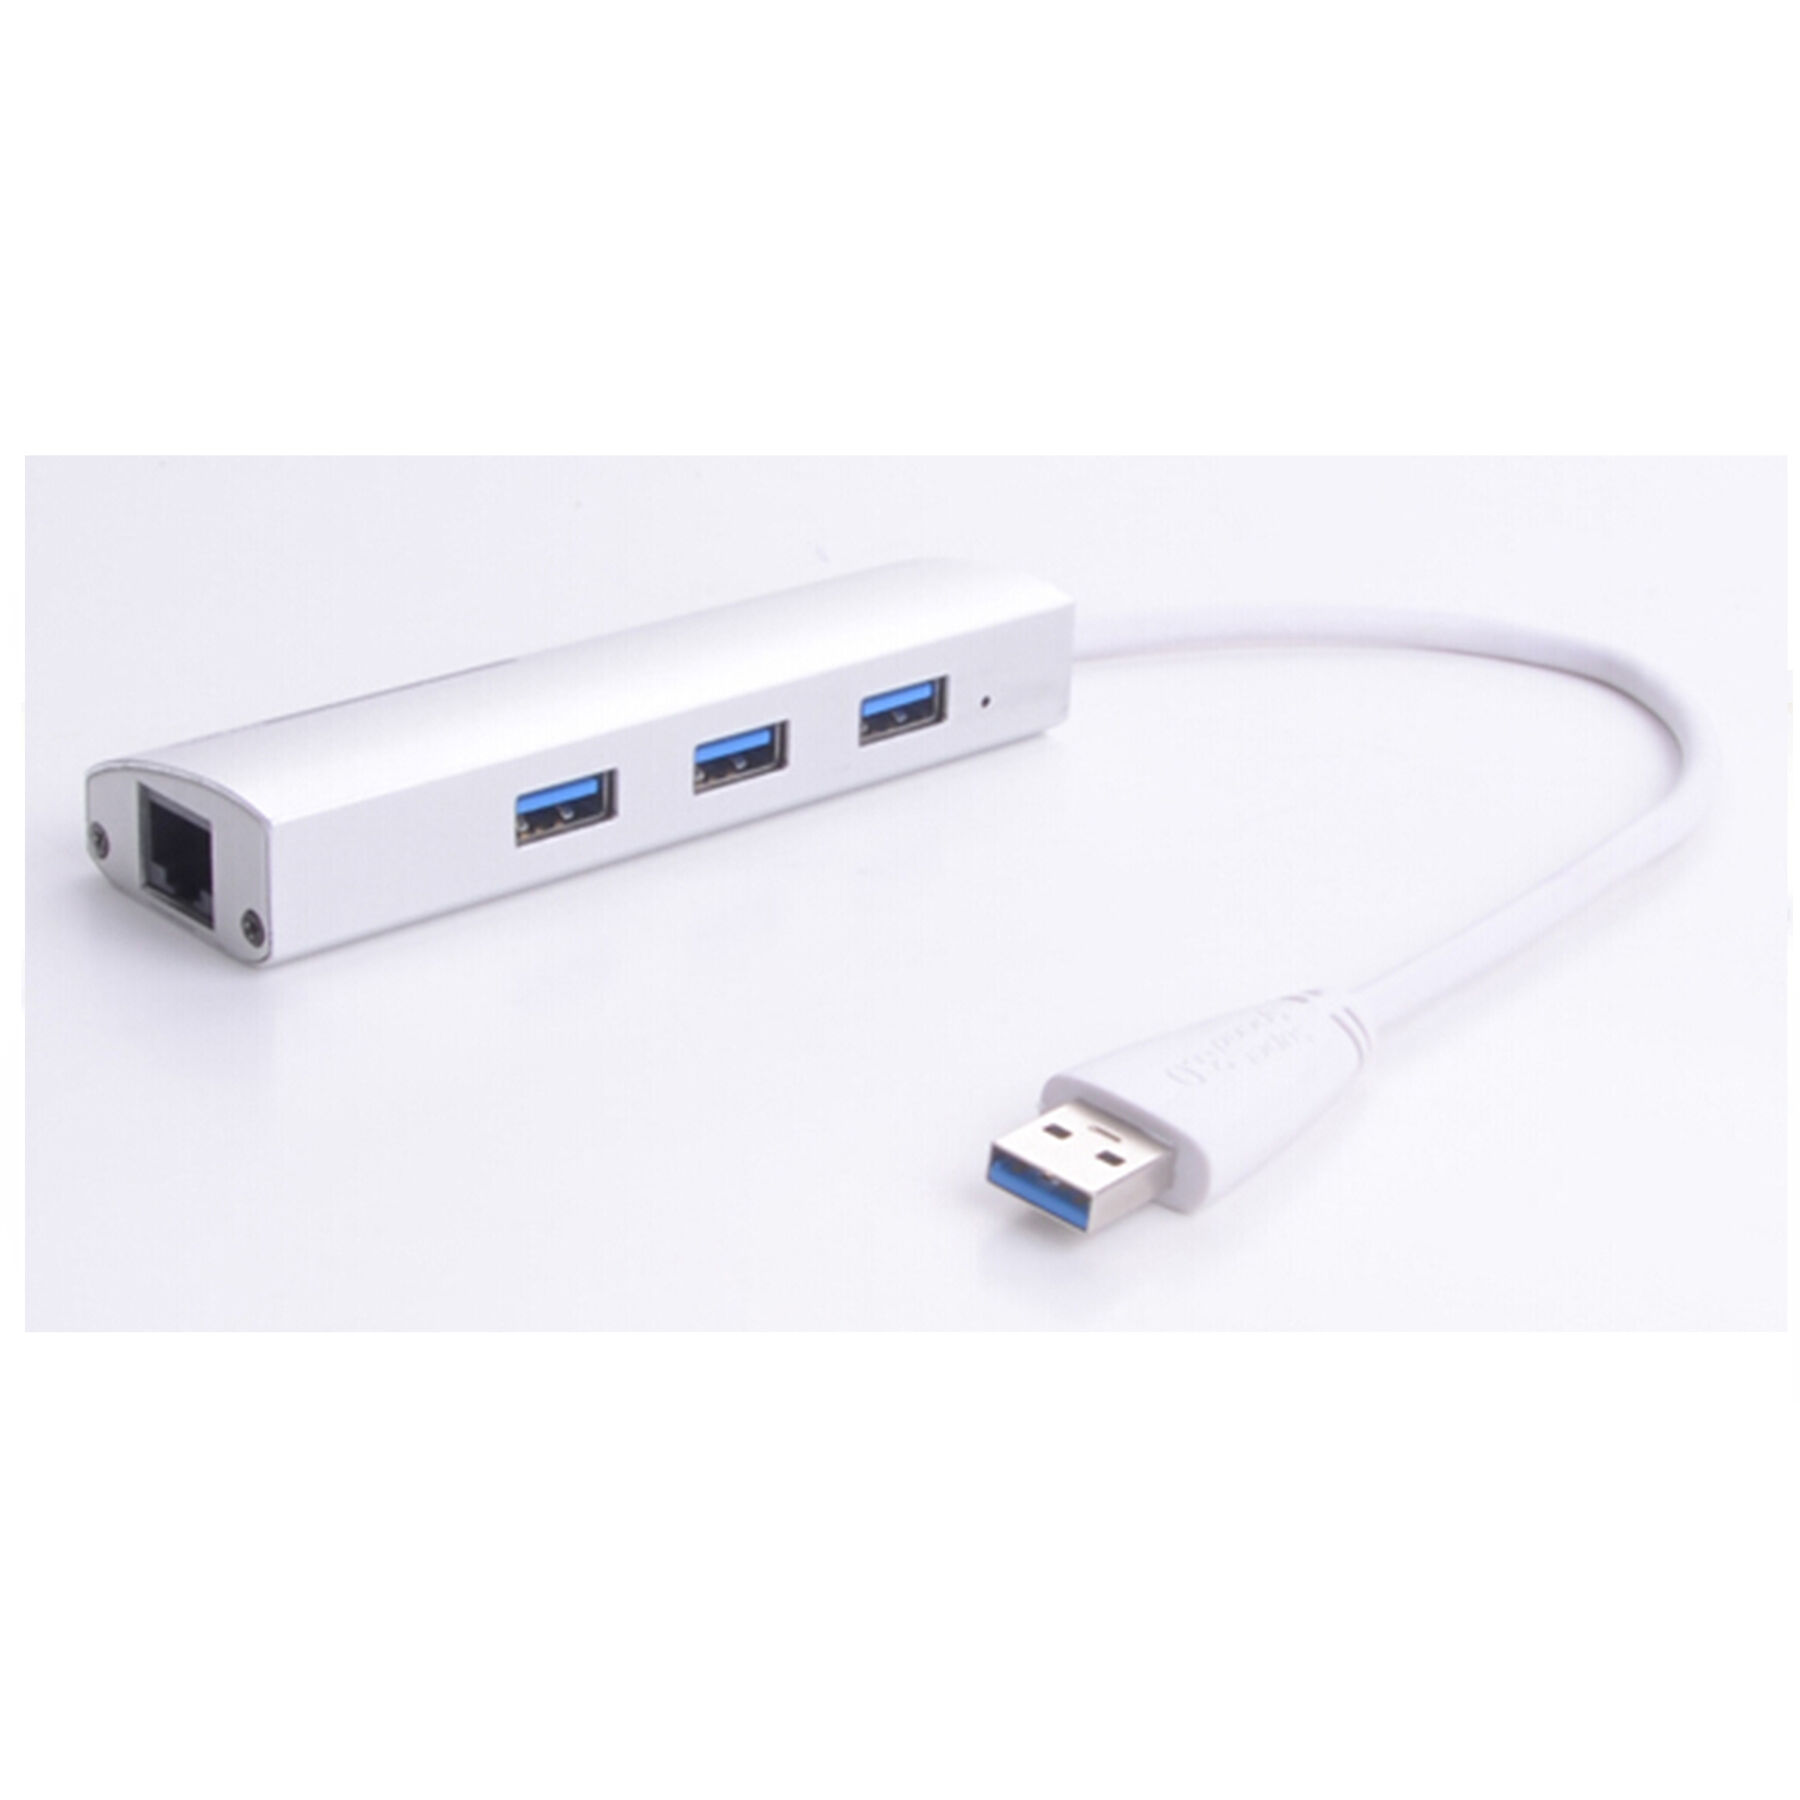 Convertidor USB-C 3.1 a Ethernet Gigabit USB 3.0 HUB (Mac OS 10) Negro